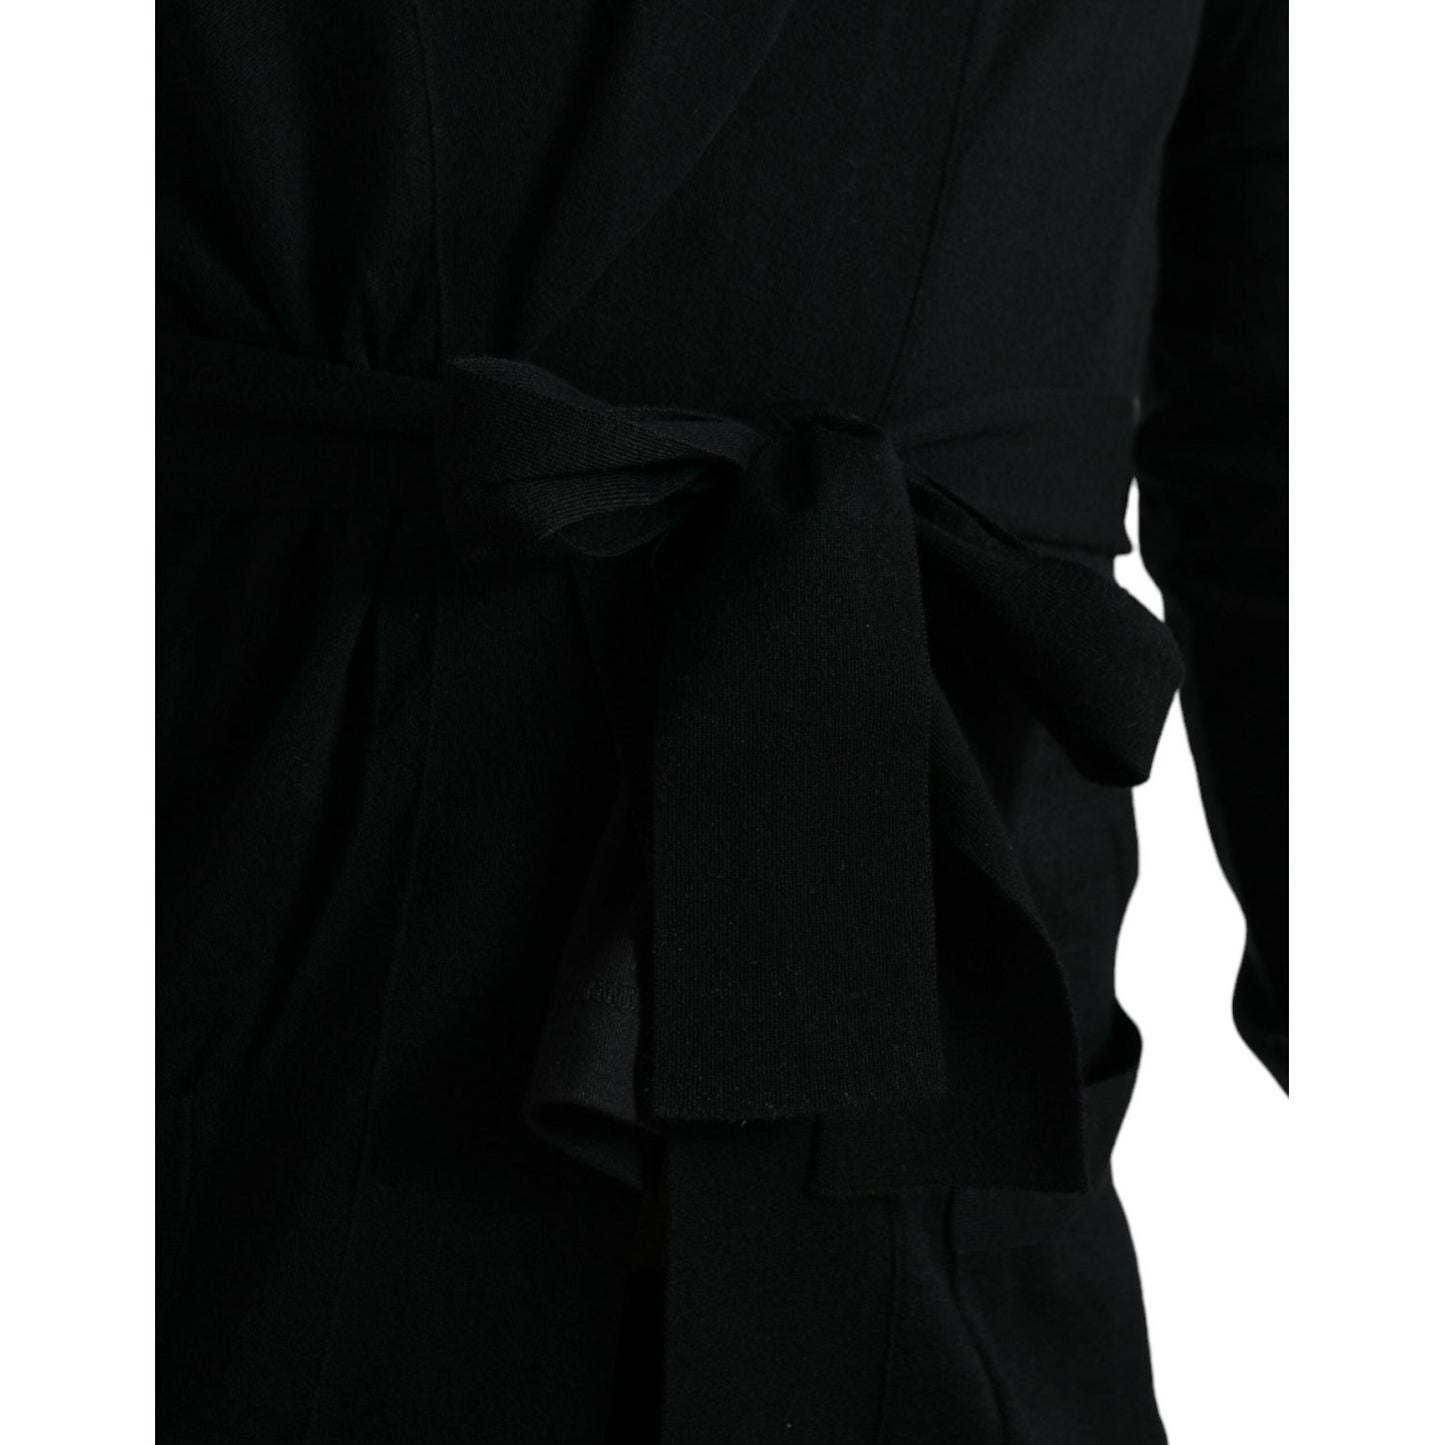 Dolce & Gabbana Elegant Black Cashmere Robe with Waist Belt black-cashmere-long-sleeves-belted-wrap-robe